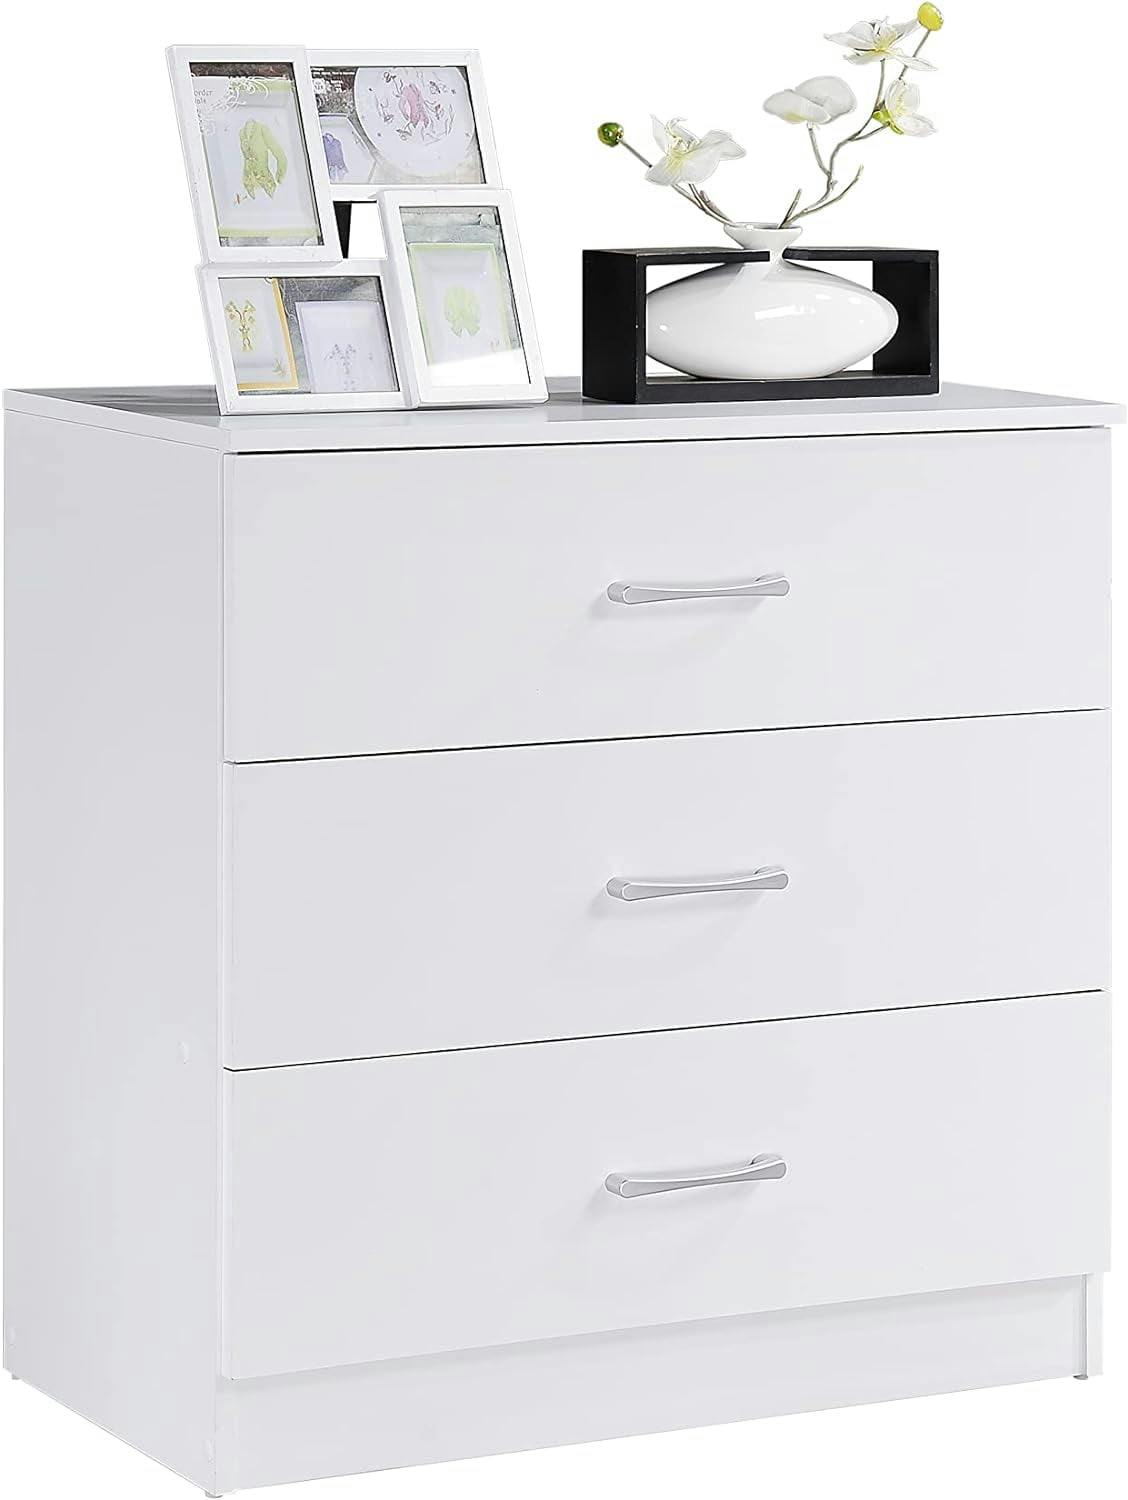 Modern White 3-Drawer Wood Dresser with Ring Pull Handles